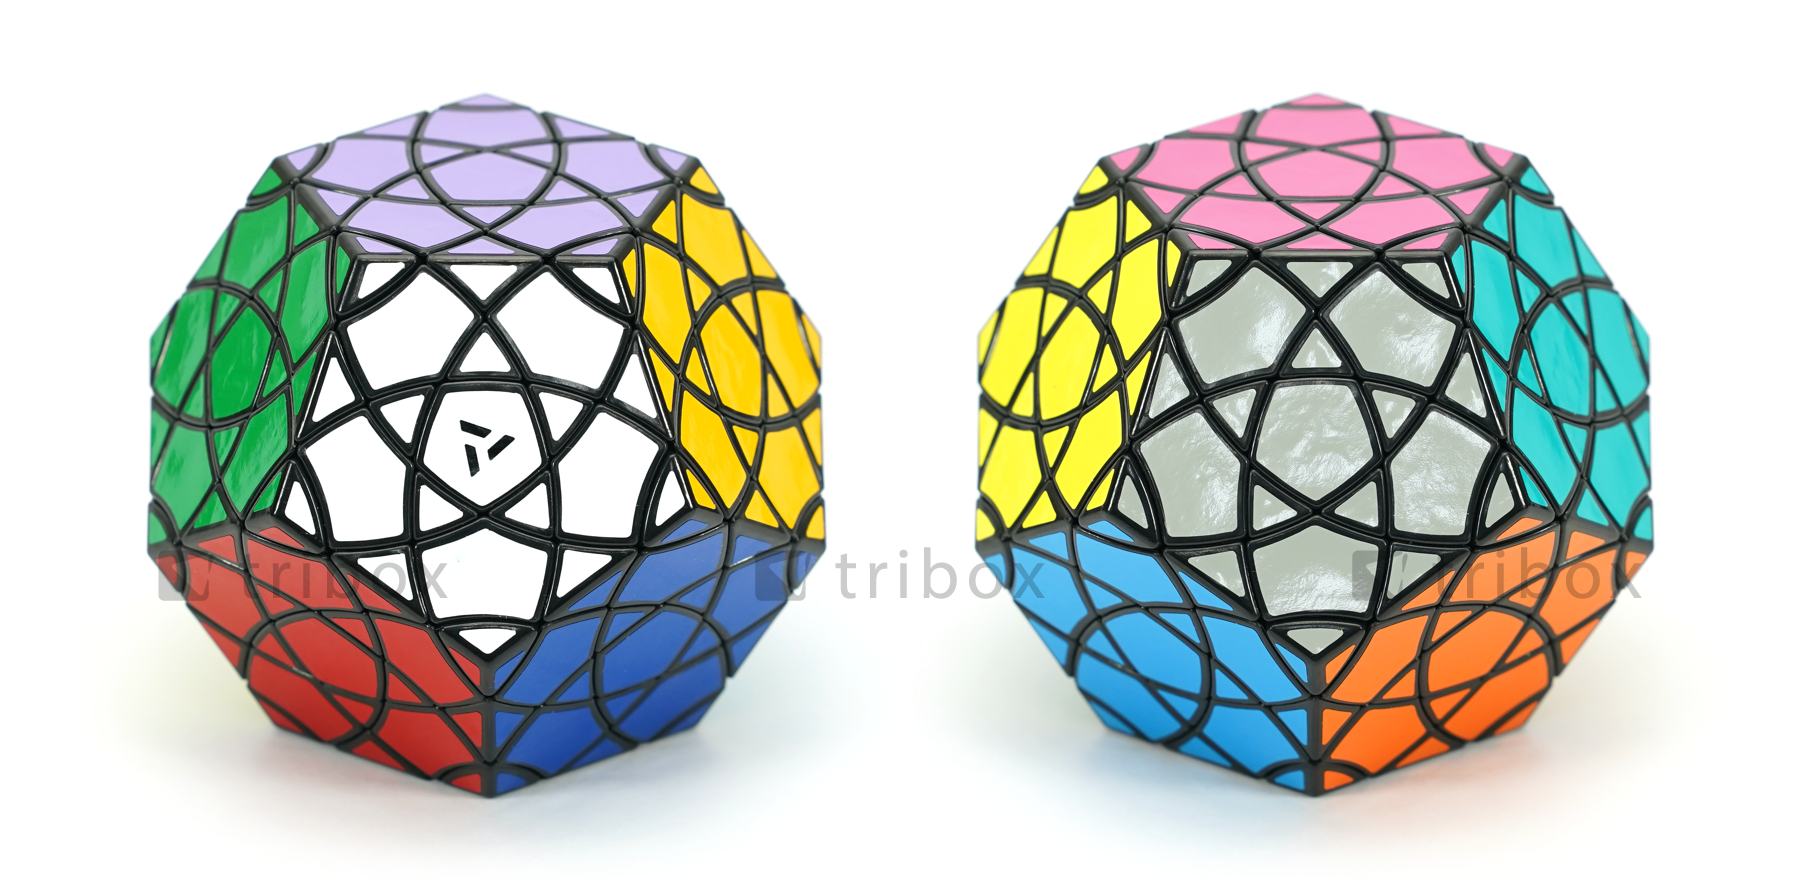 triboxストア / AJ Bauhinia Dodecahedron II